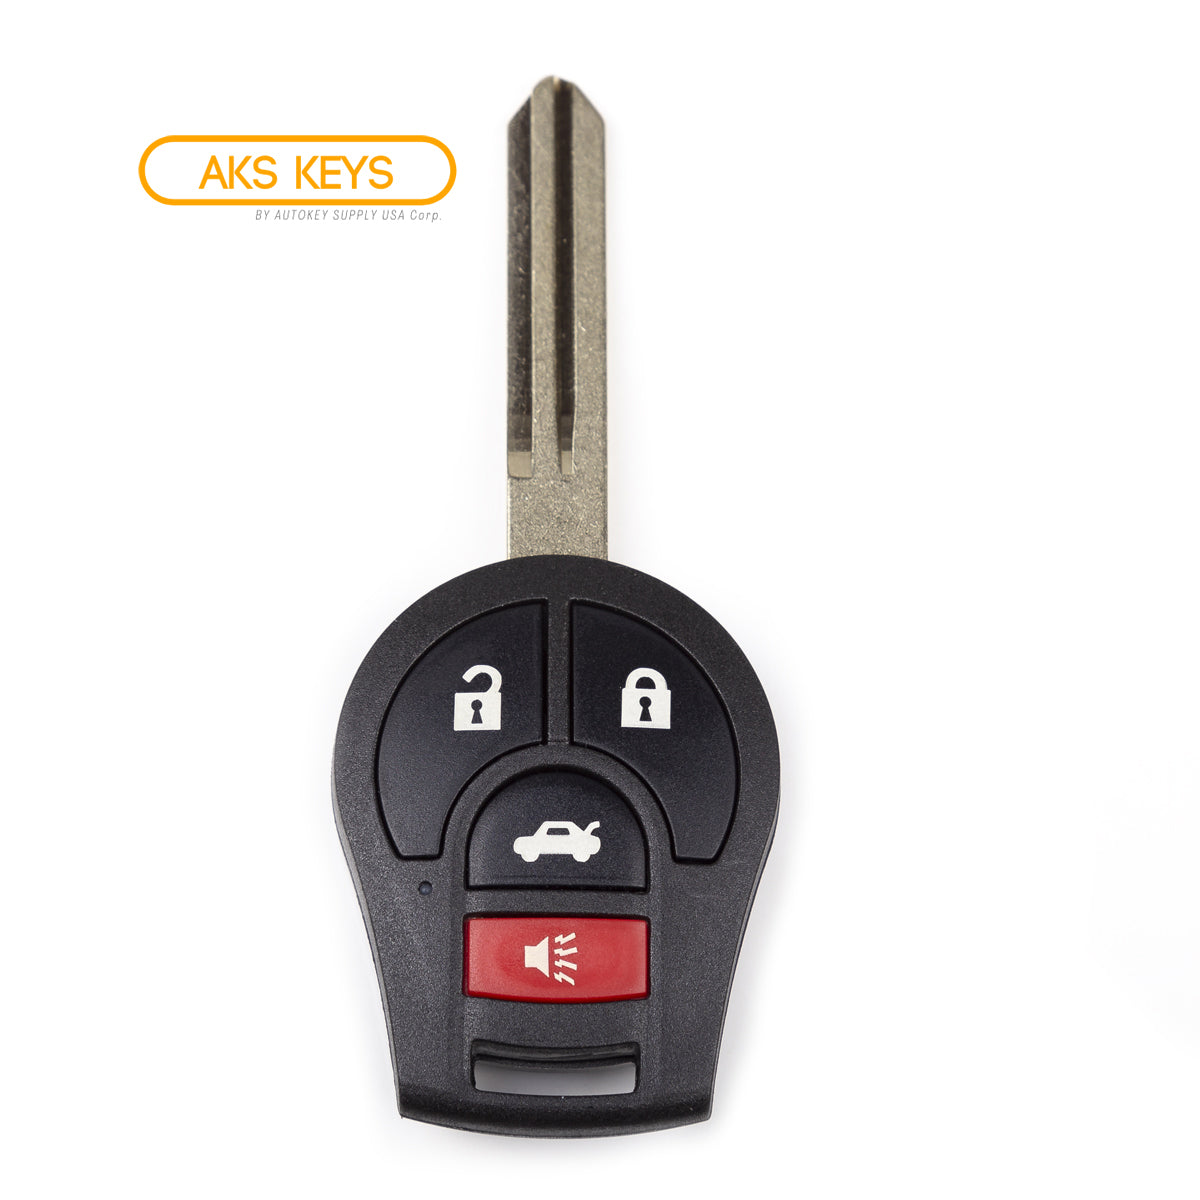 2010 Nissan Xterra Key Fob - Aftermarket - 4 Buttons Fob FCC# CWTWB1U751 - ID46 Chip